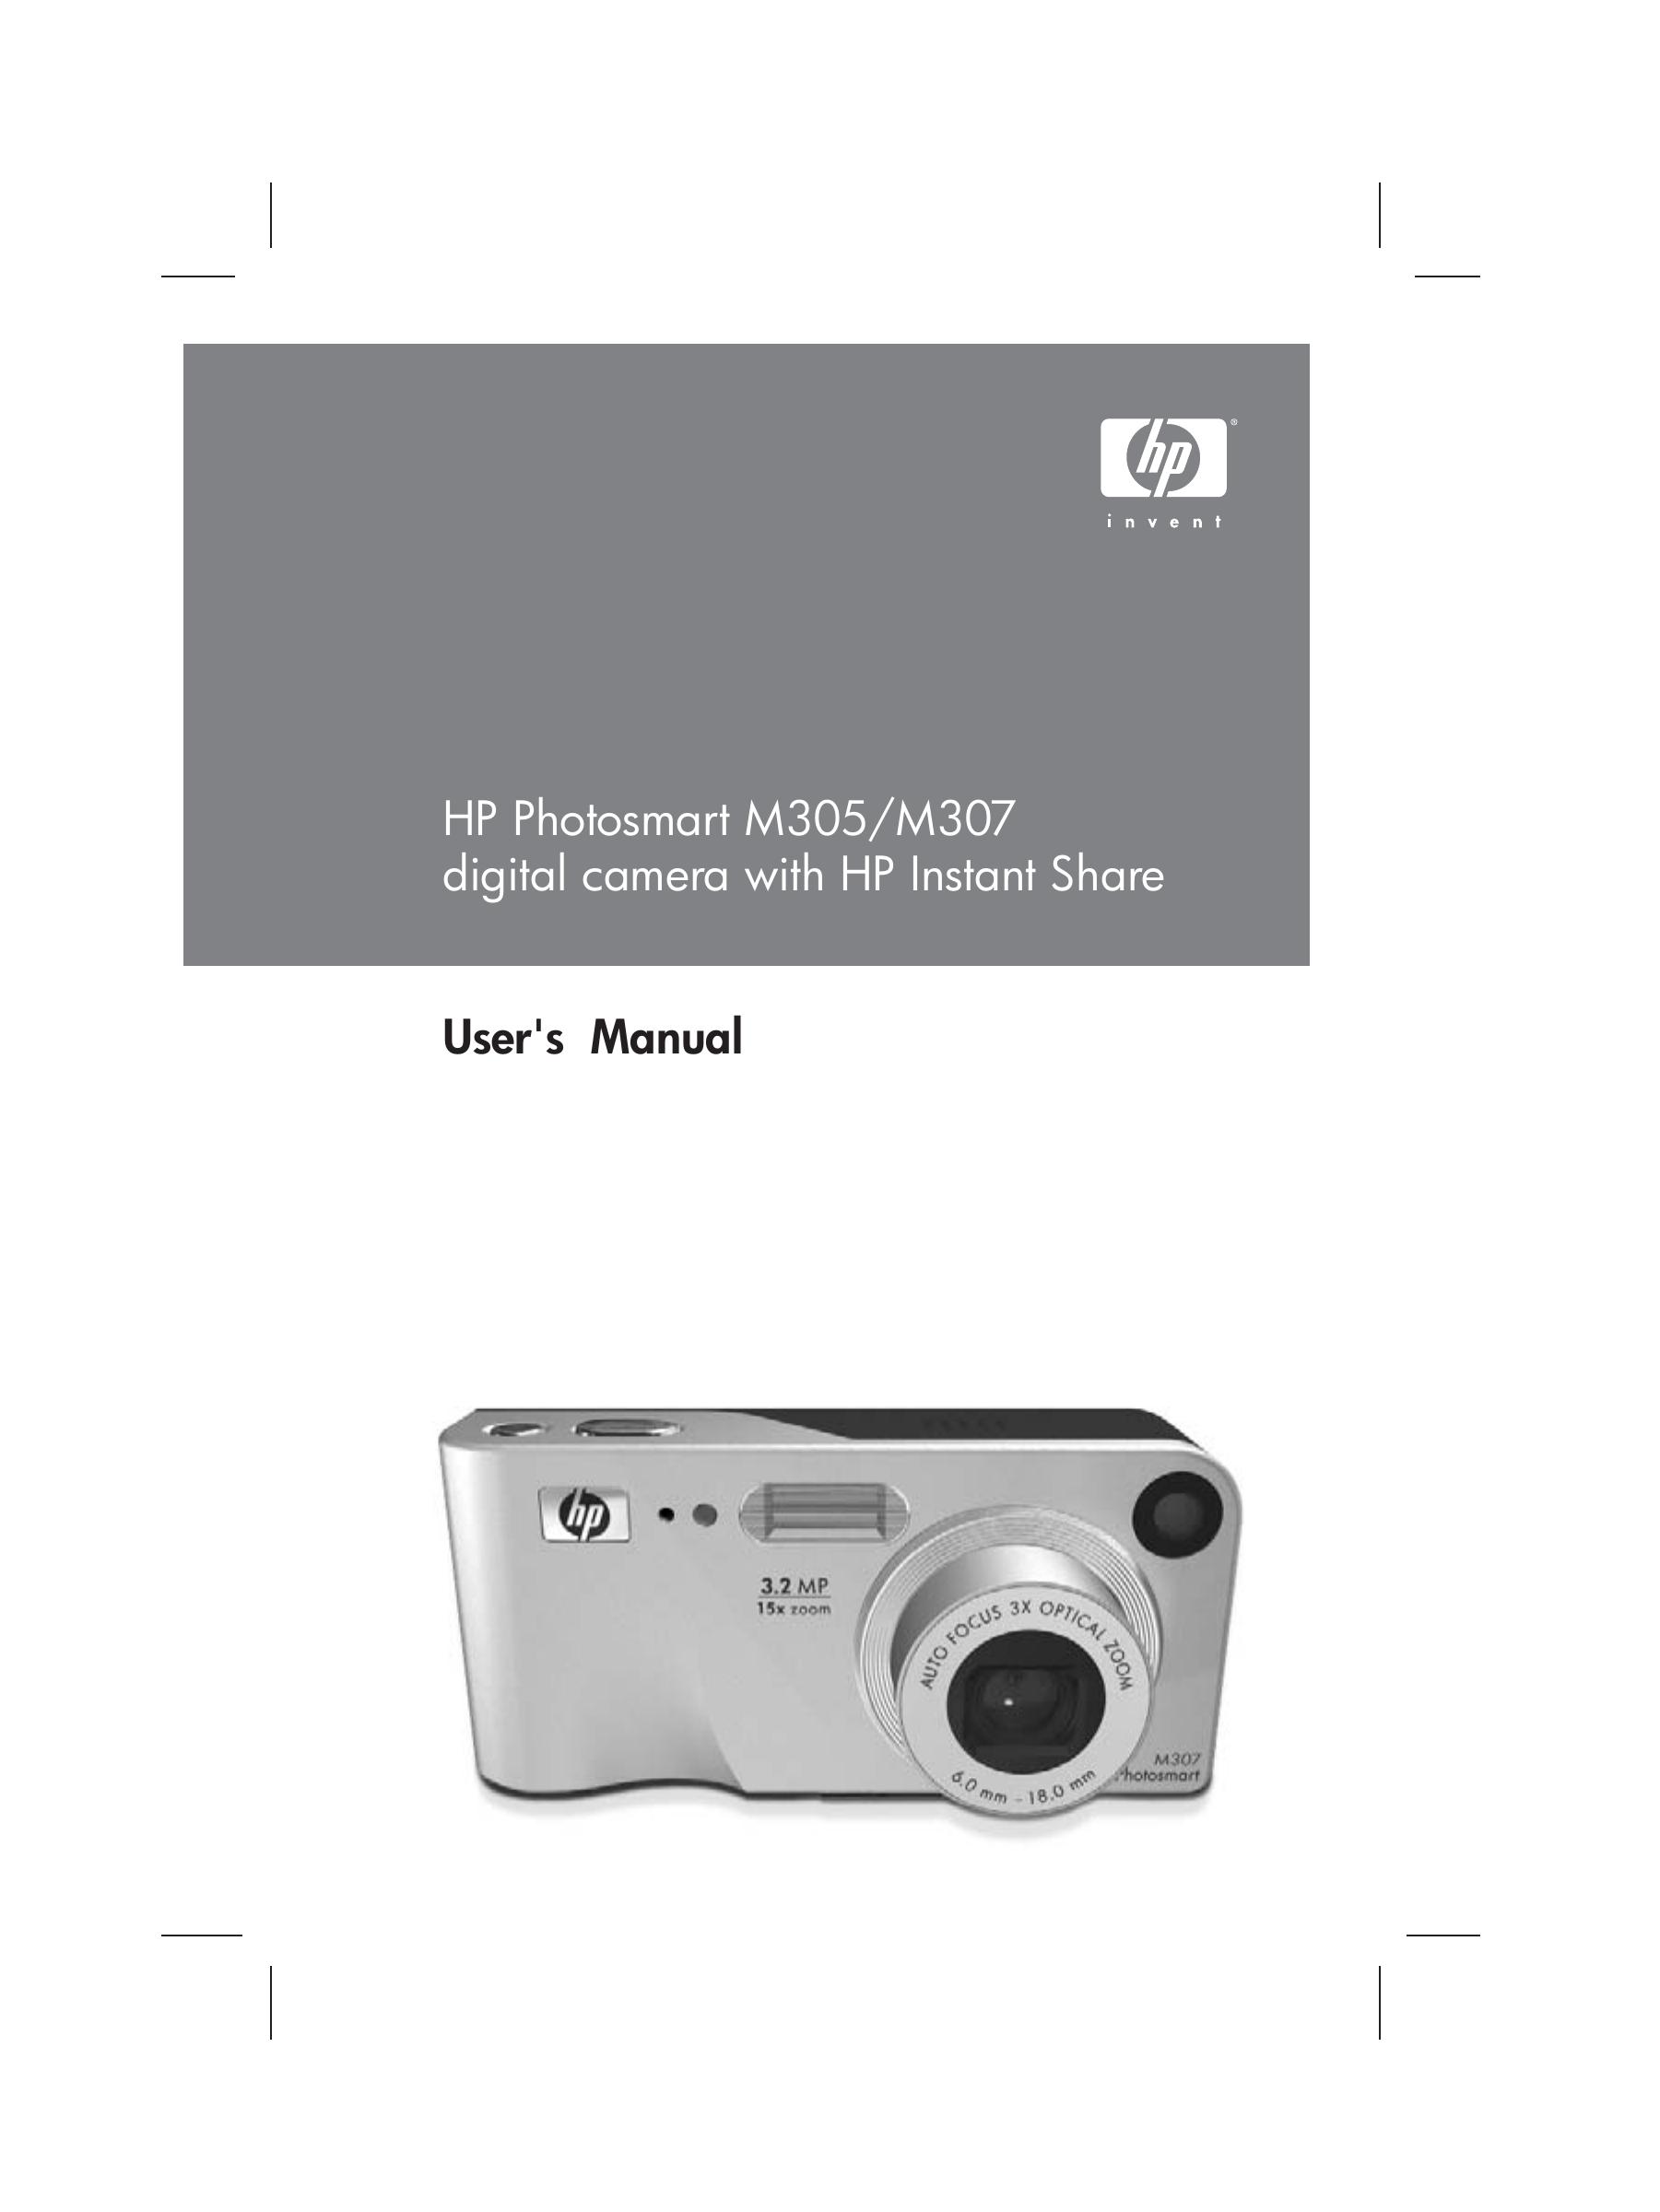 HP (Hewlett-Packard) M305/M307 Digital Camera User Manual